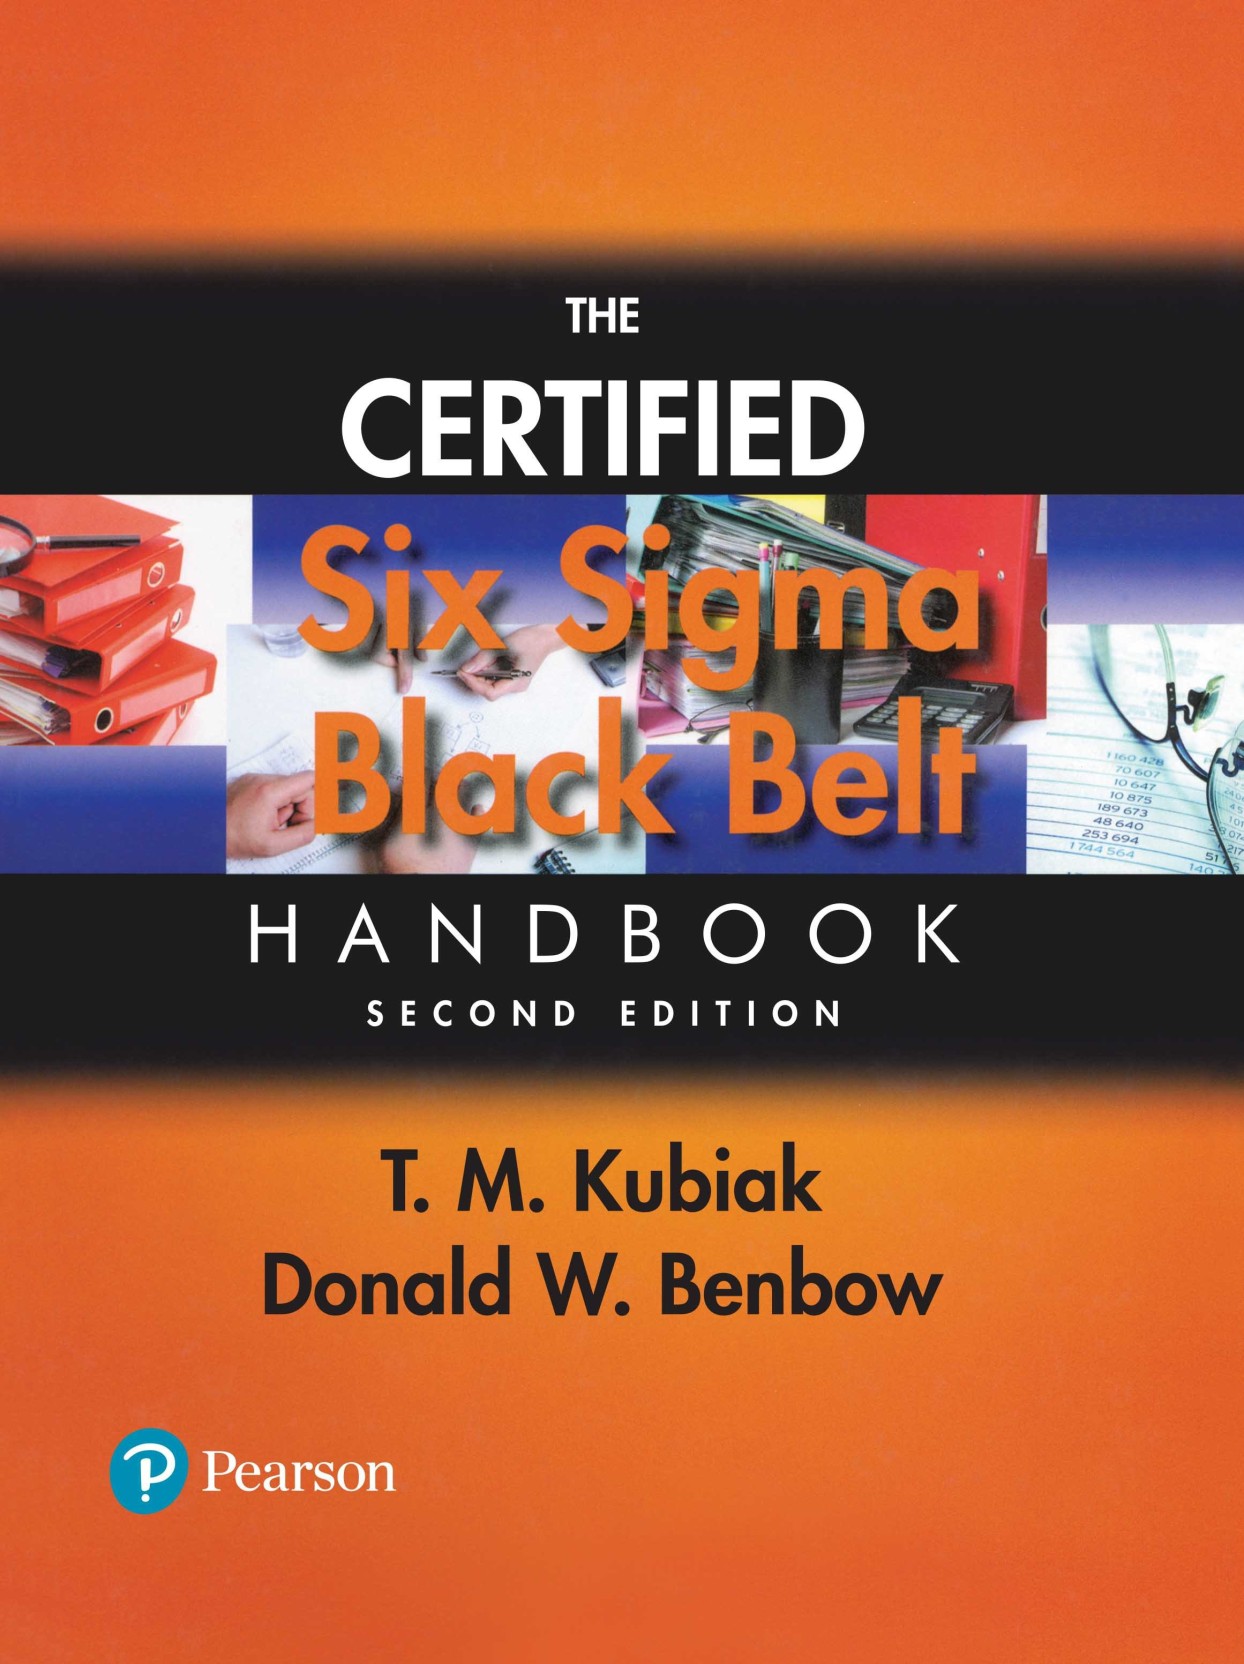 online six sigma black belt programs